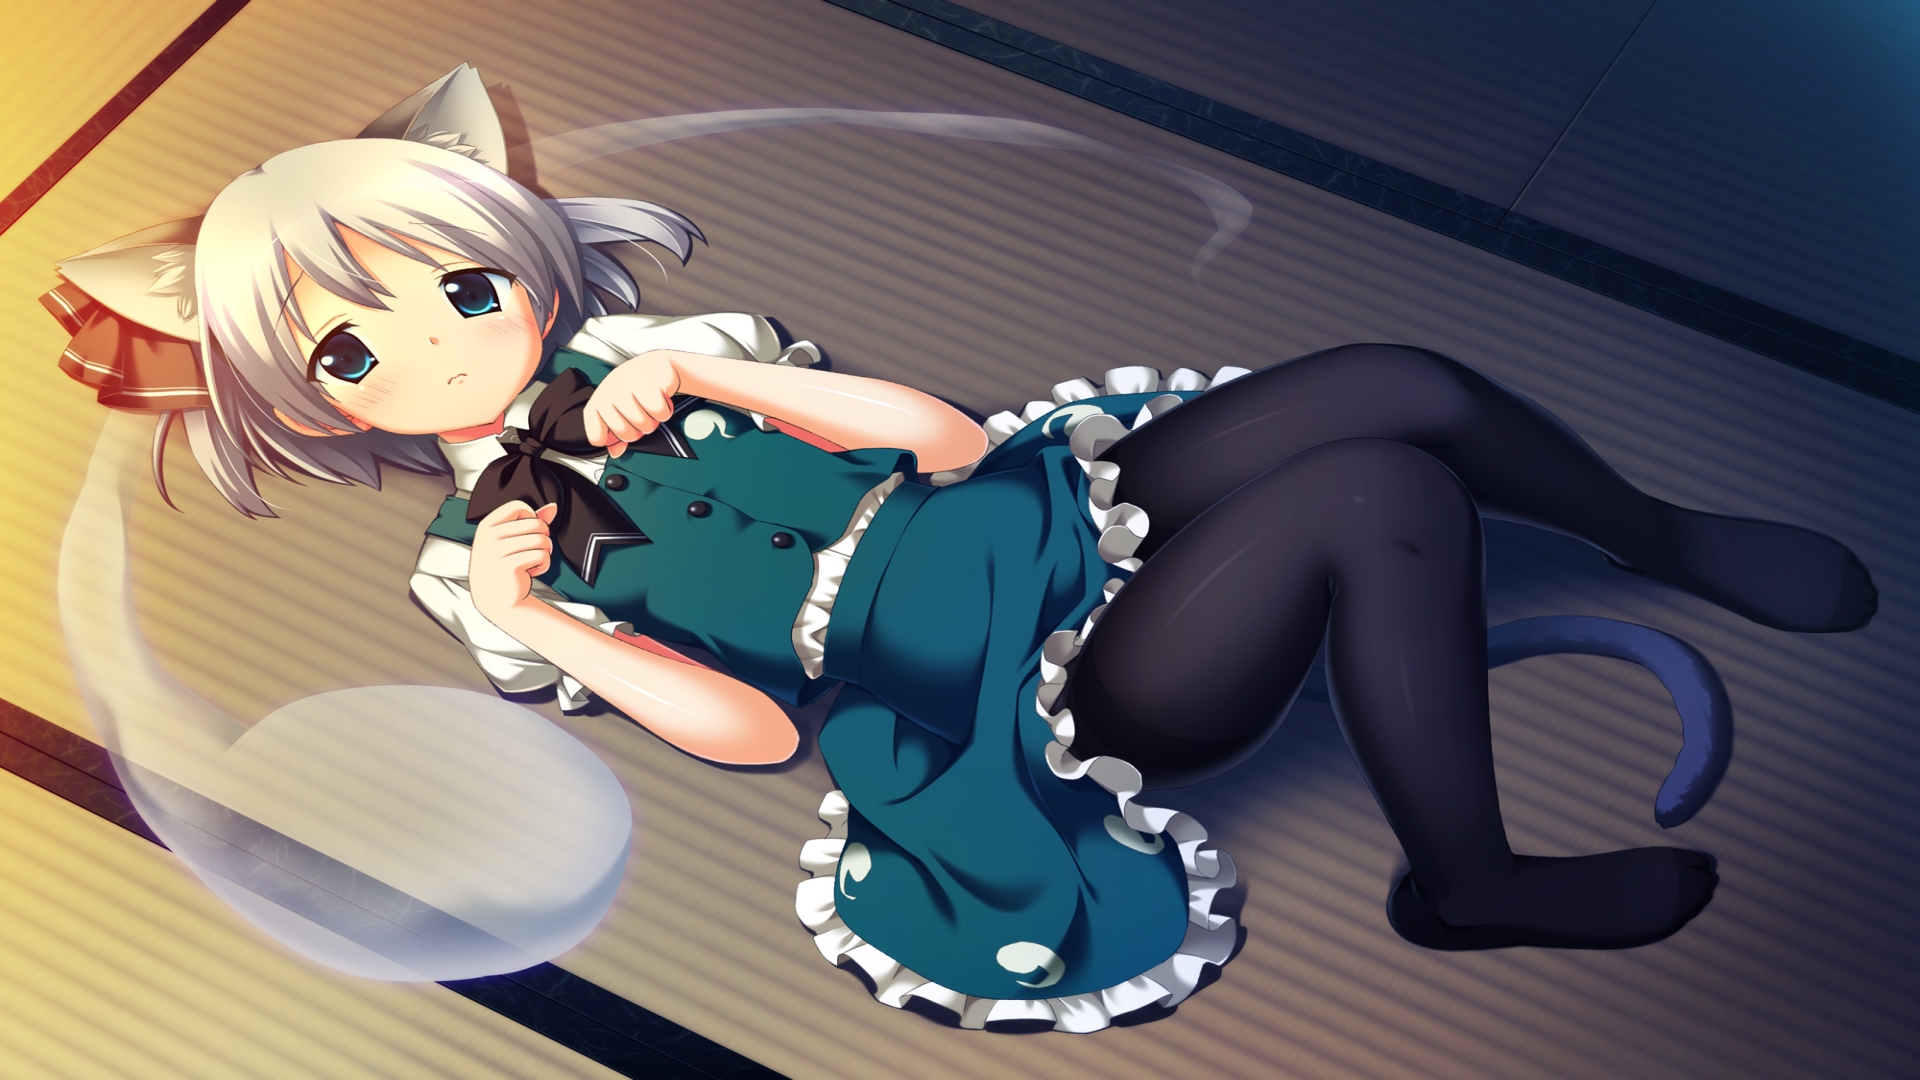 Touhou Myon Konpaku Youmu Anime Girls Animal Ears Tail Anime Cat Girl On The Floor Knees Together As 1920x1080